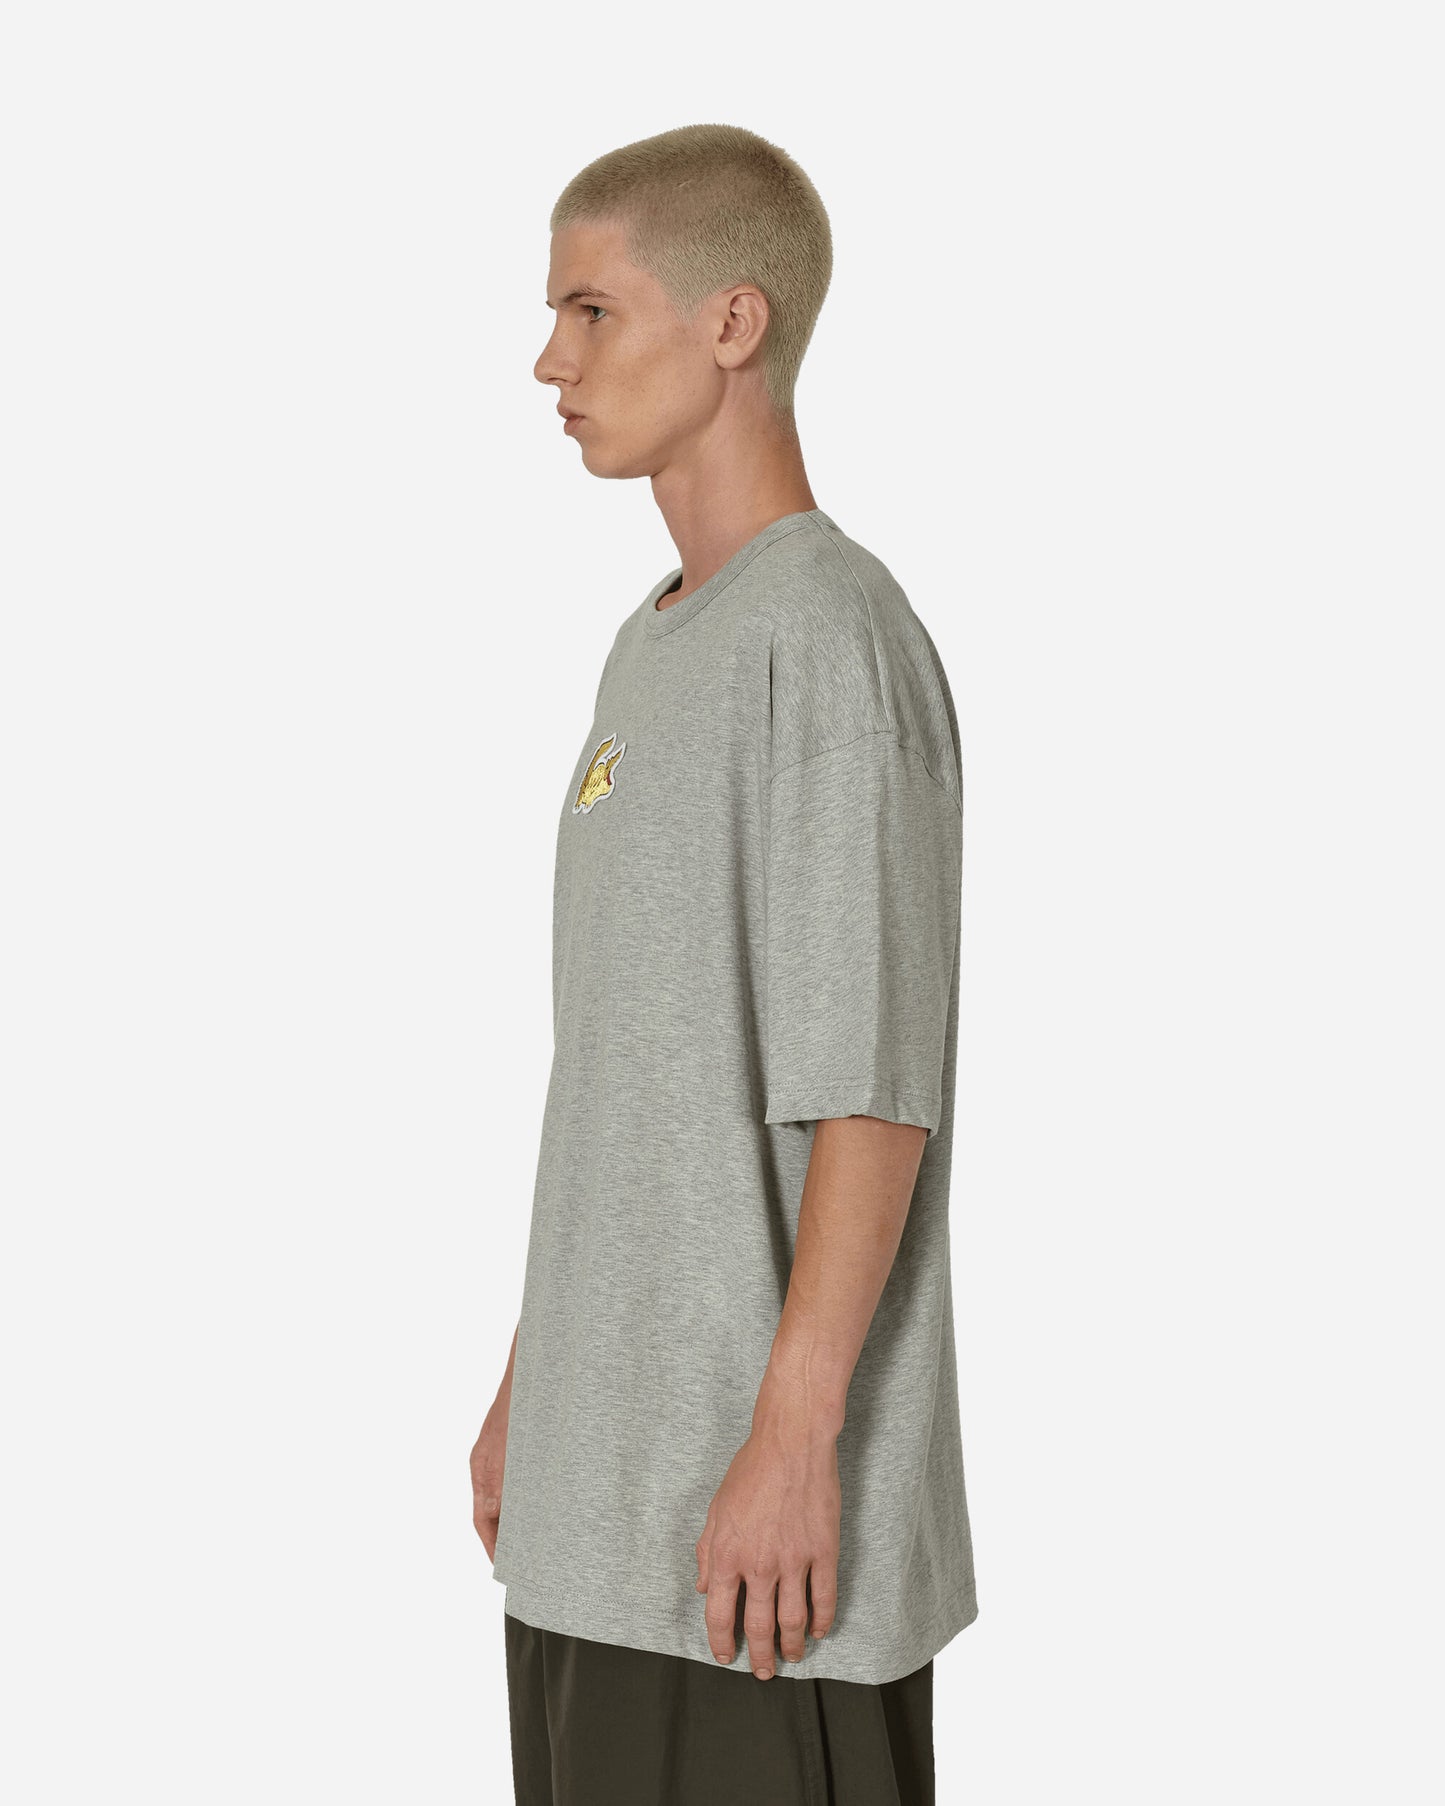 Comme Des Garçons Shirt Mens T-Shirt X Lacoste Top Grey T-Shirts Shortsleeve FL-T008-W23  1